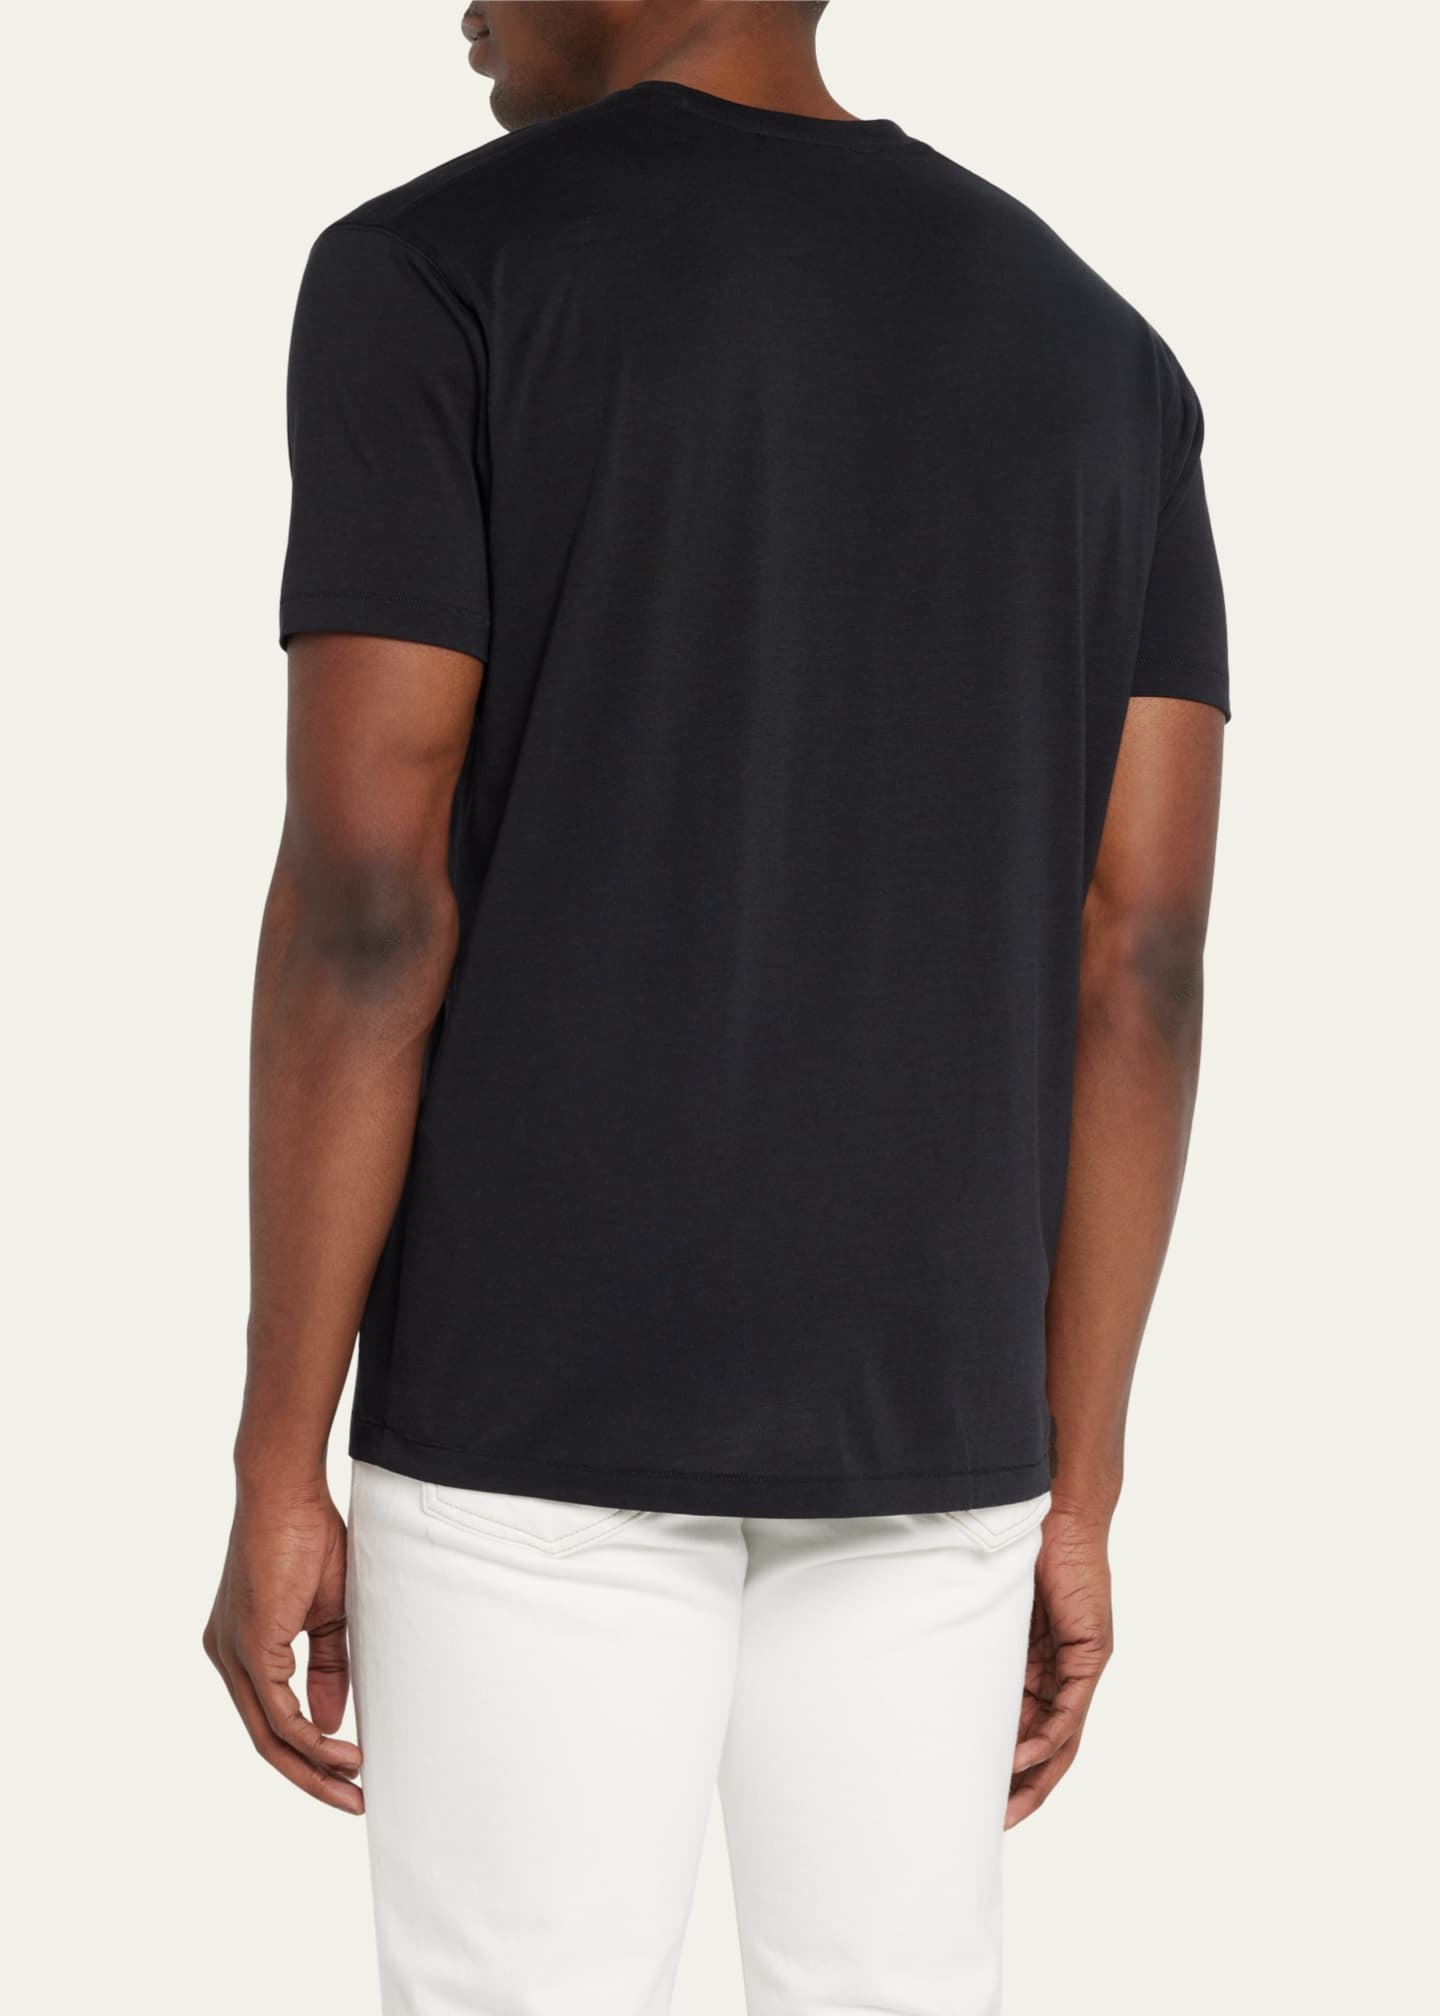 Tom Ford Men's Black Cotton T-Shirt